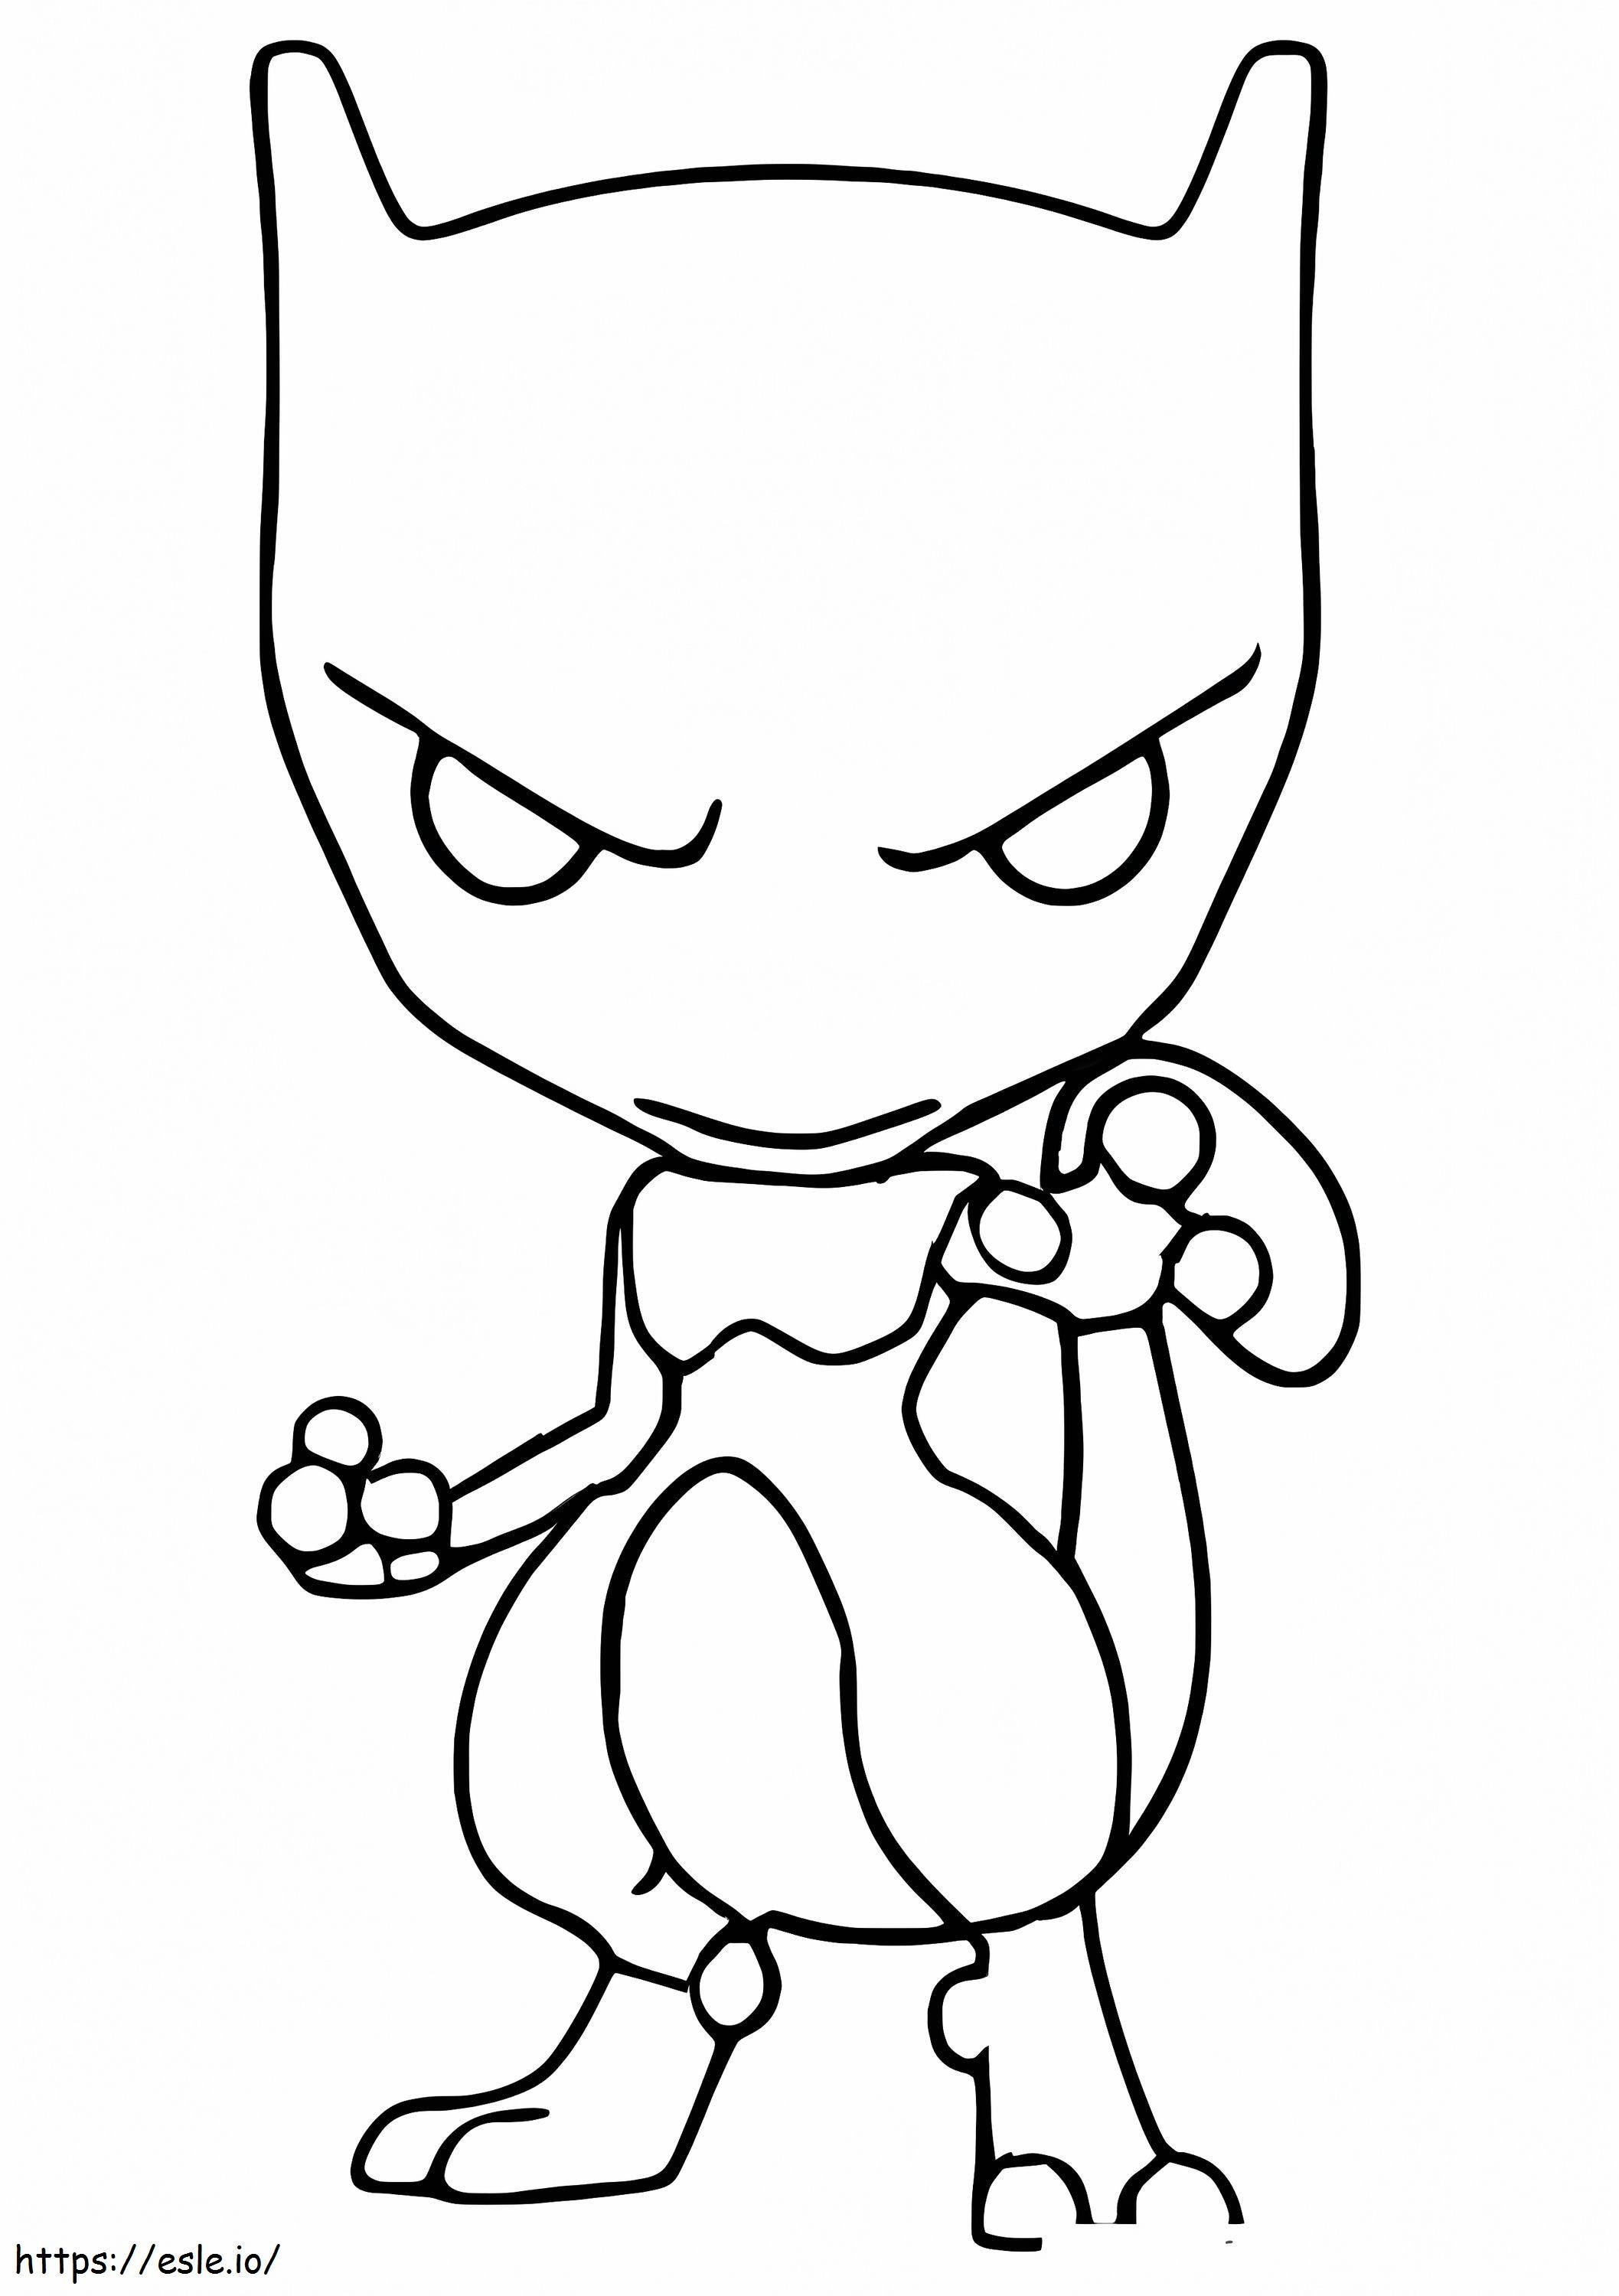 Chibi Mewtwo coloring page